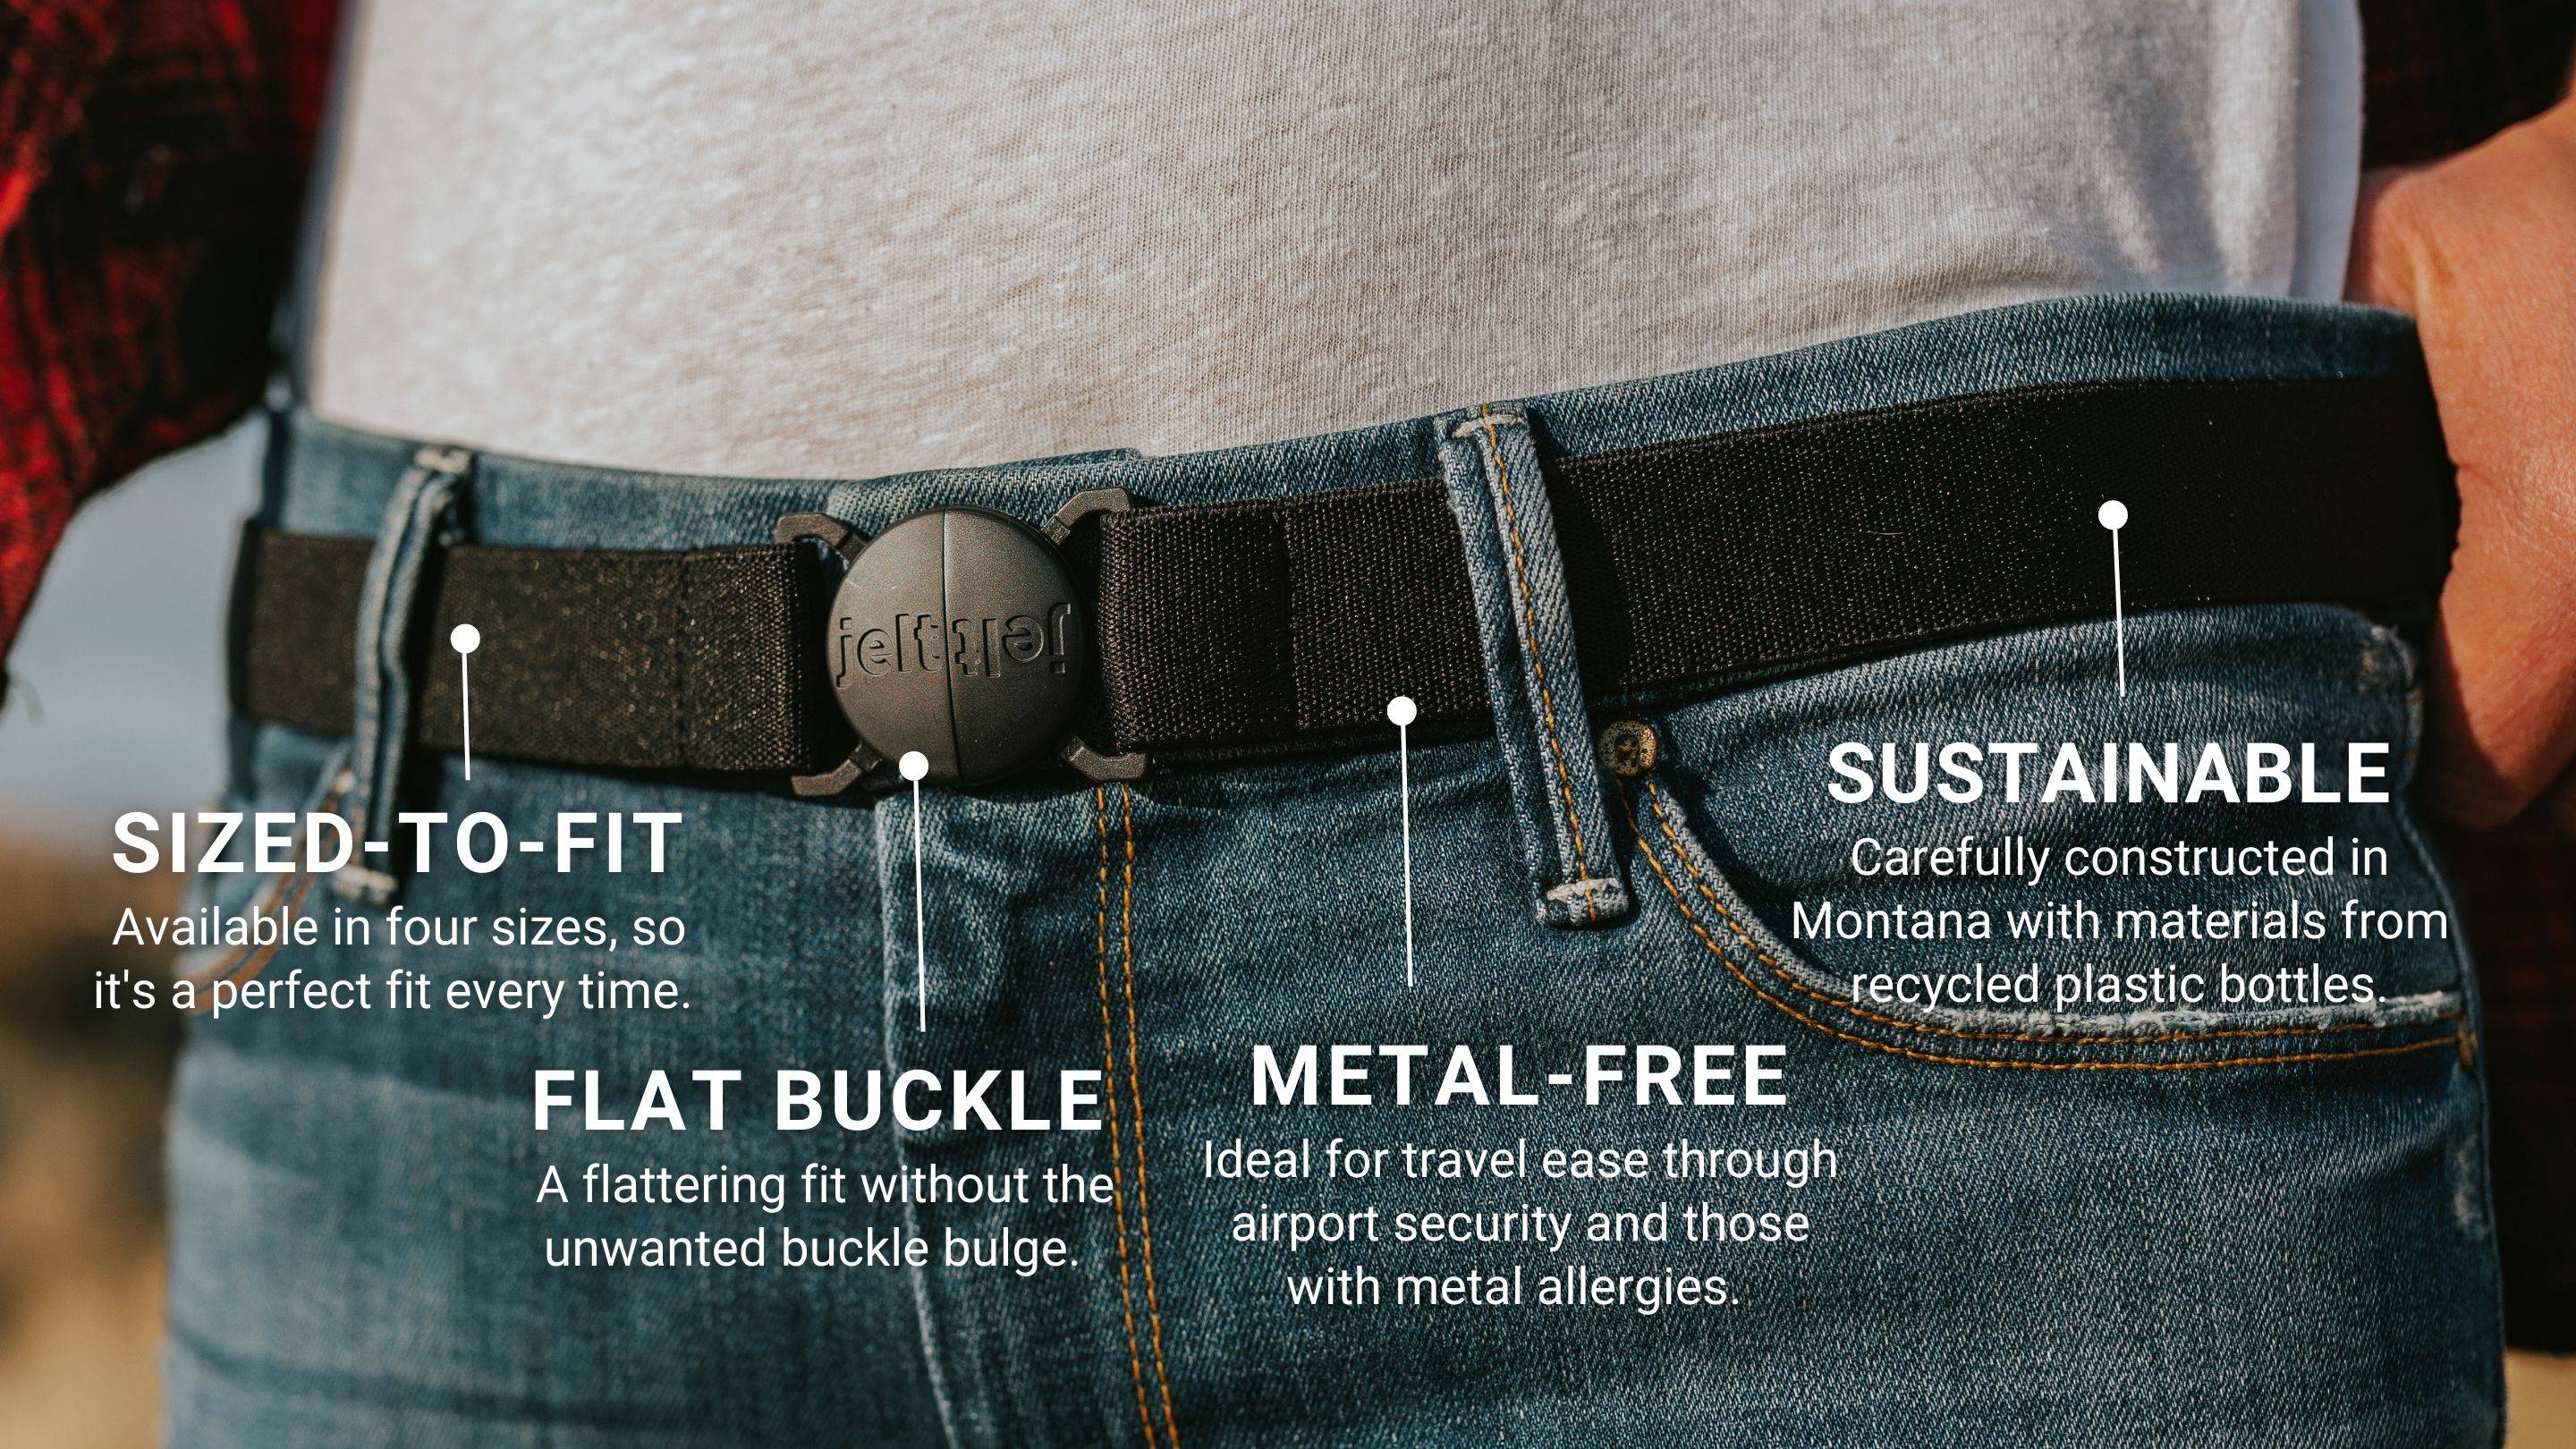 Anatomy of a Jelt original belt collection